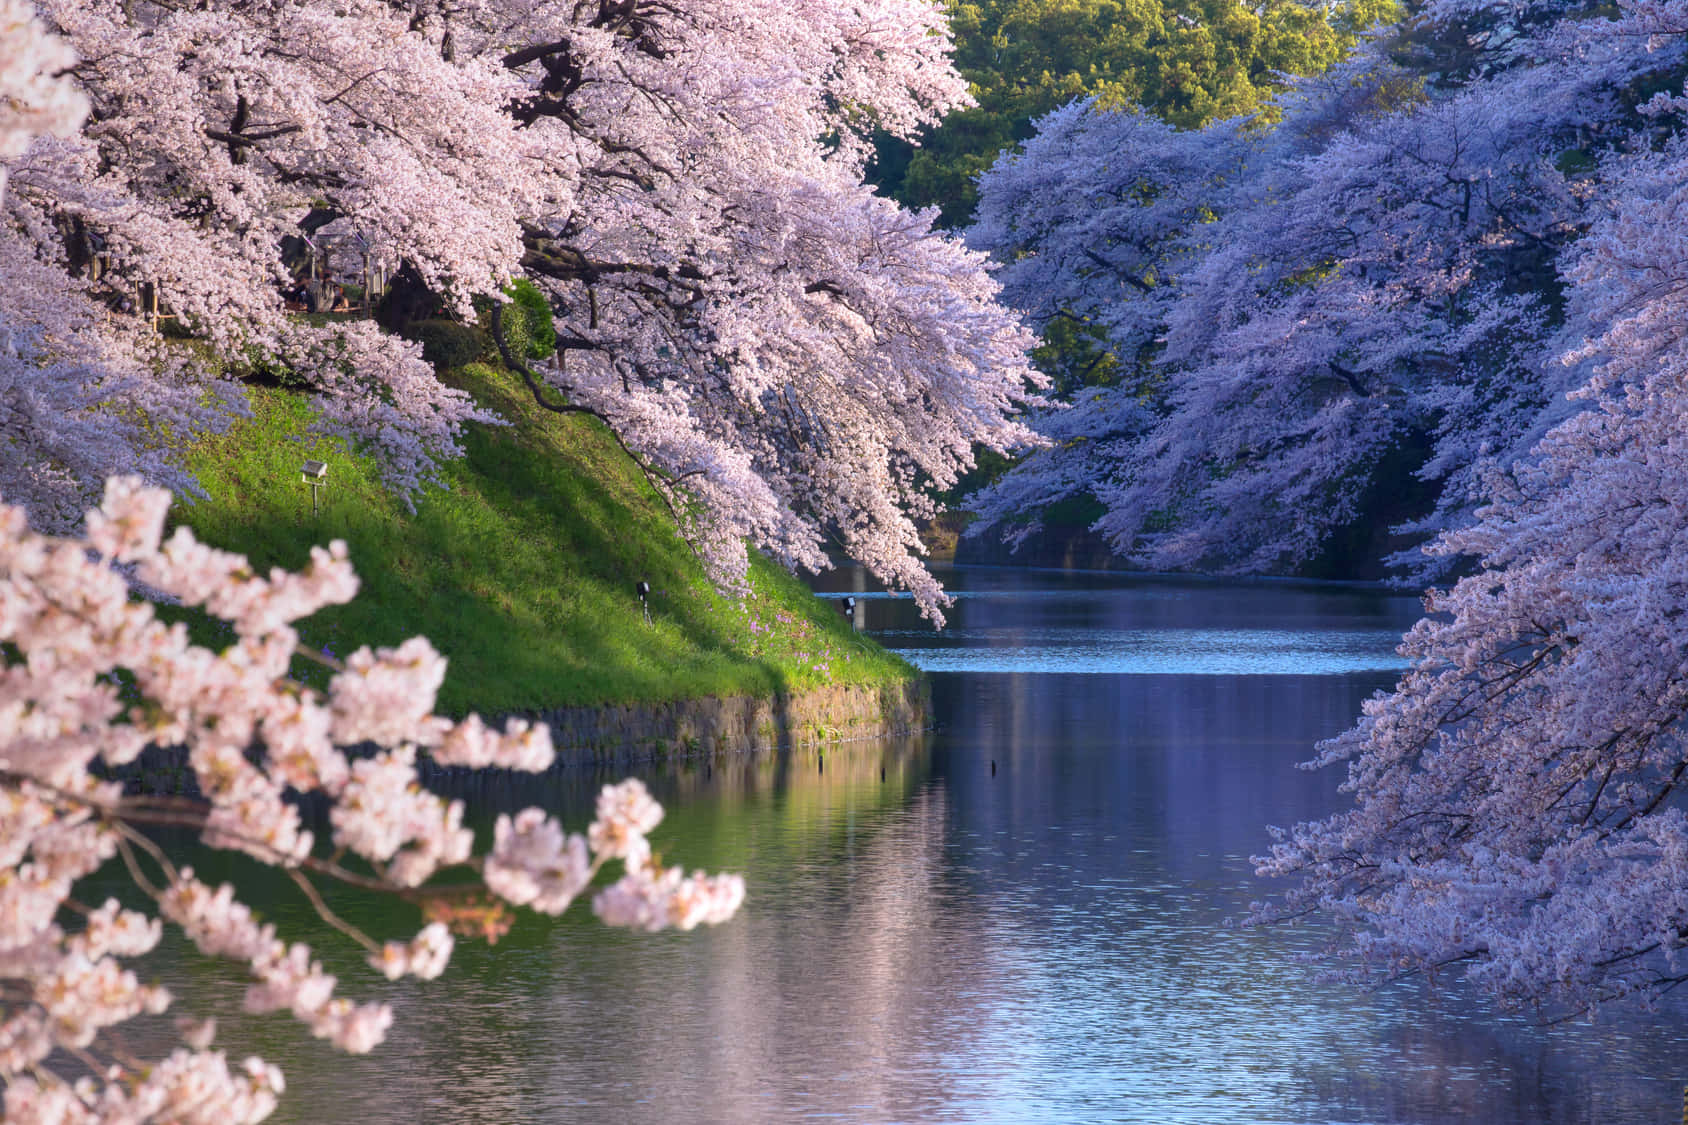 Enjoy a relaxing picnic in the beautiful Japanese sakura blossoms